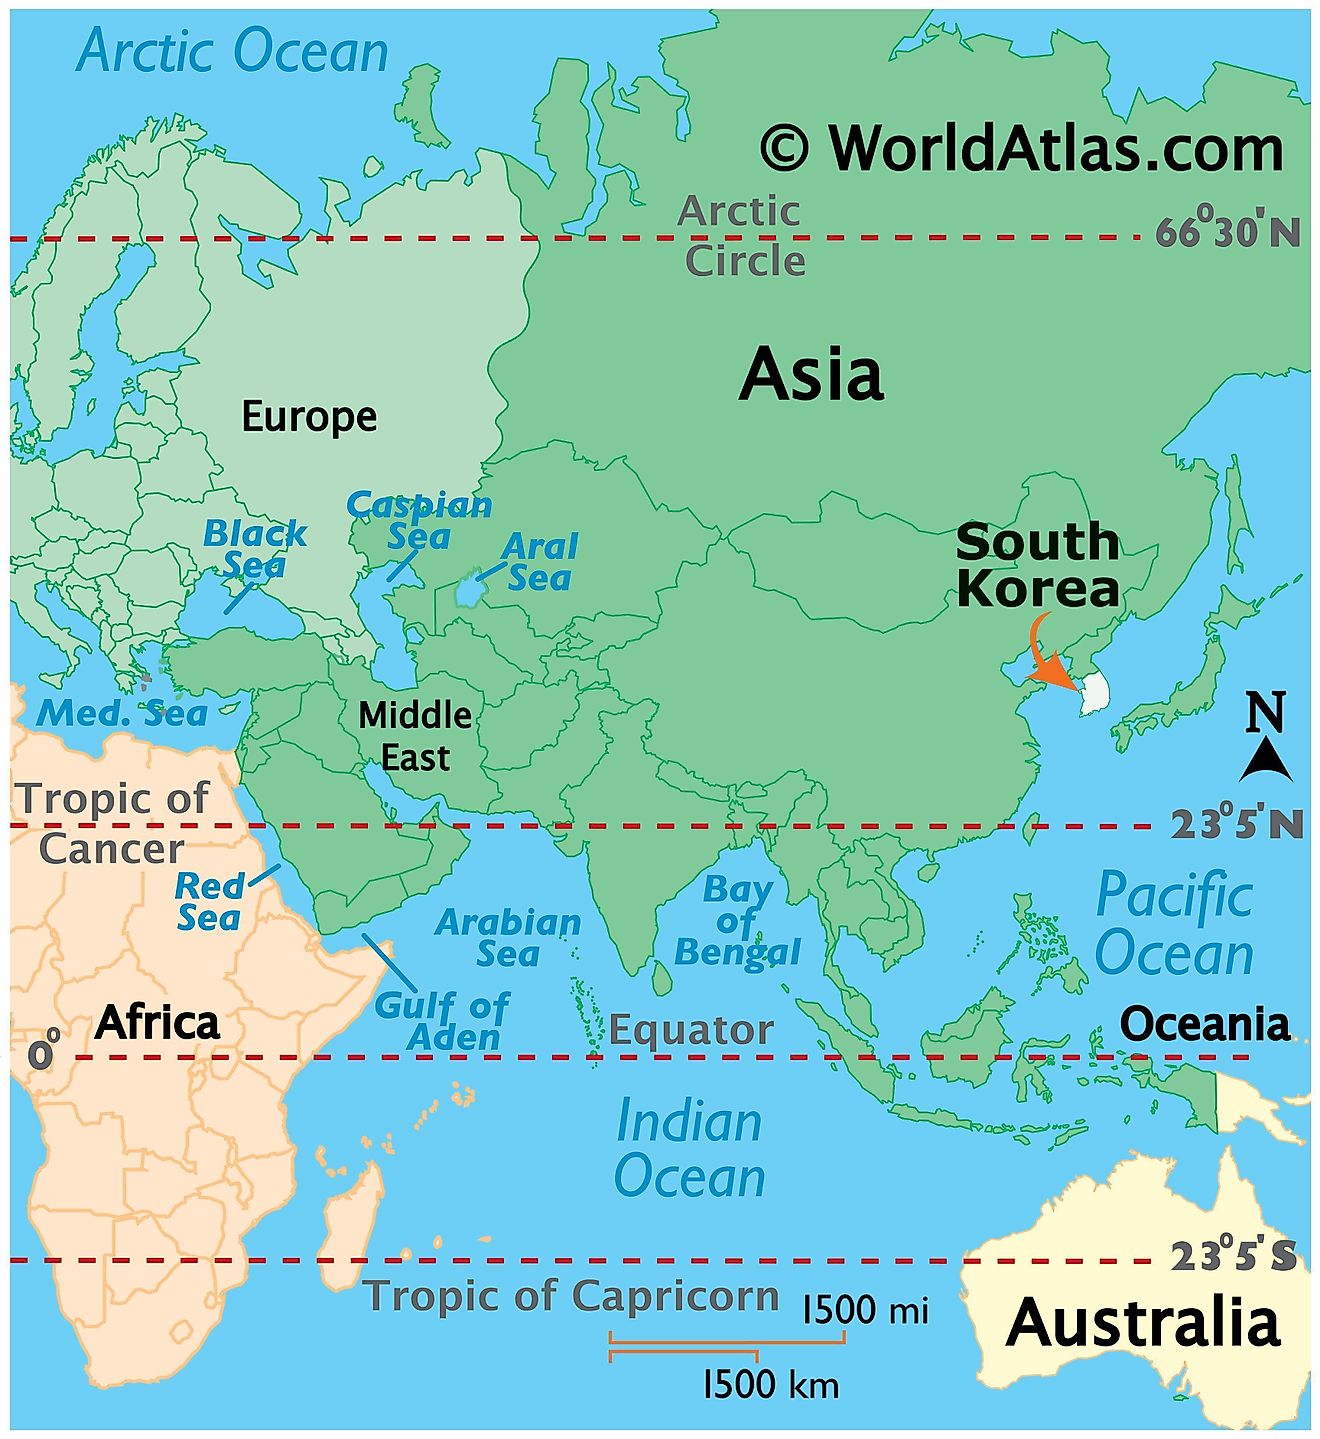 South Korea And North Korea In World Map South Korea Maps & Facts - World Atlas